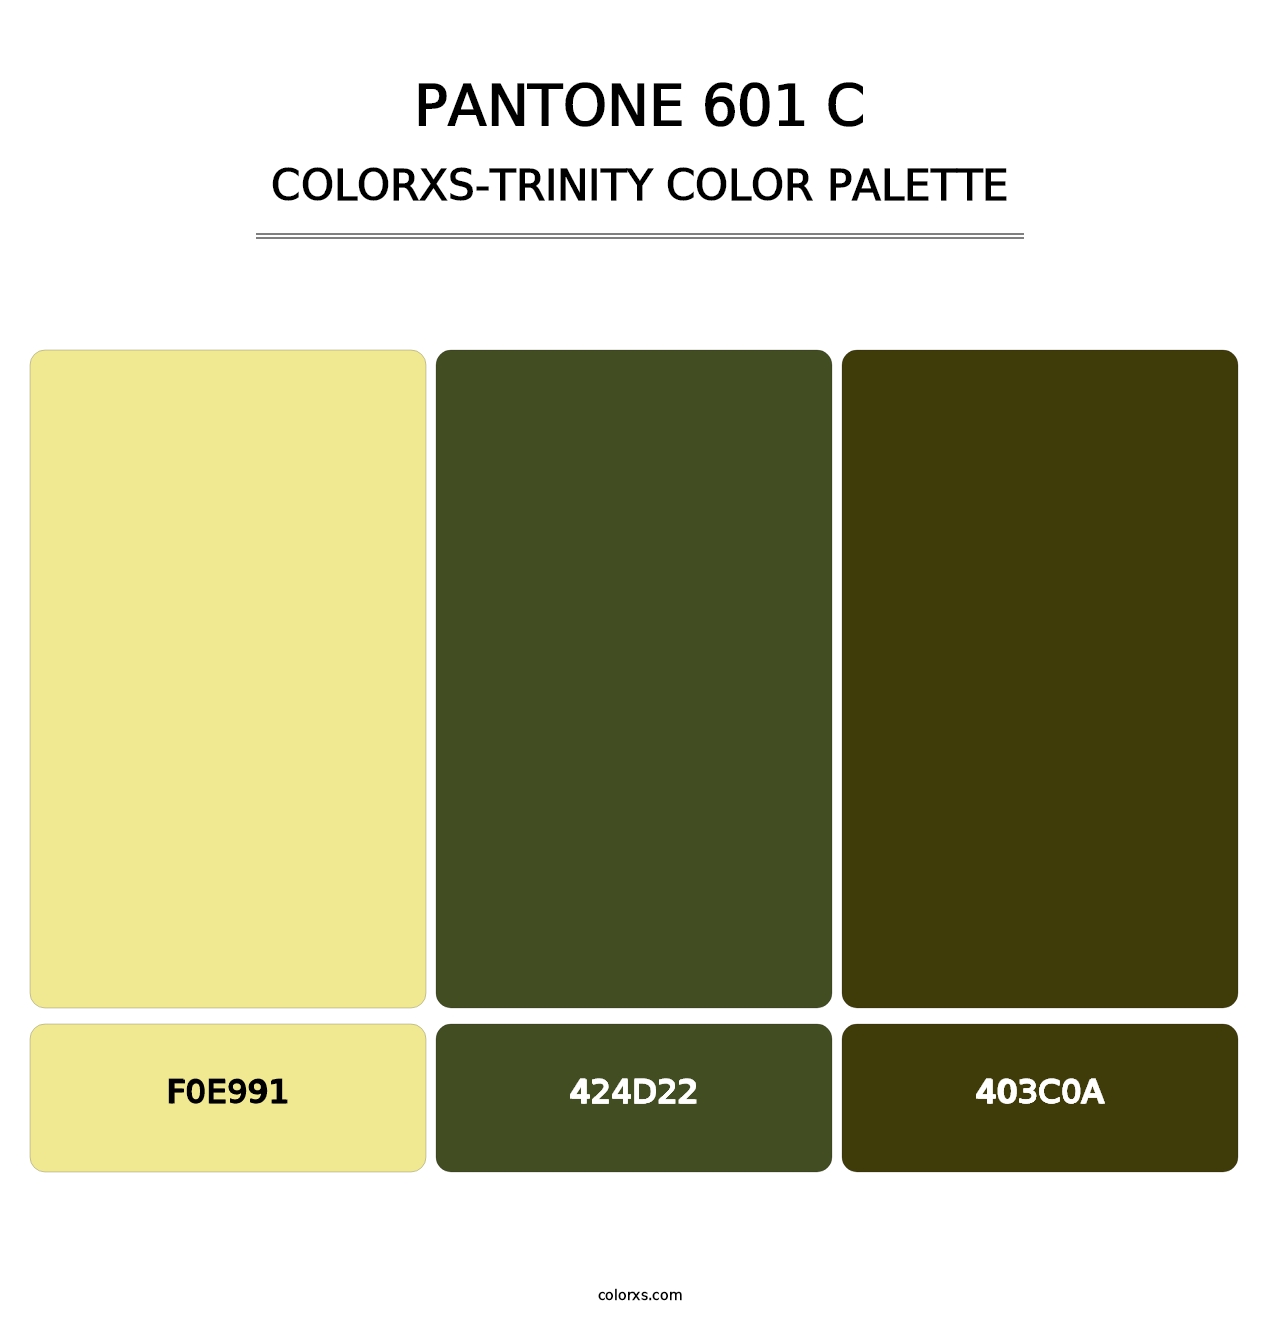 PANTONE 601 C - Colorxs Trinity Palette